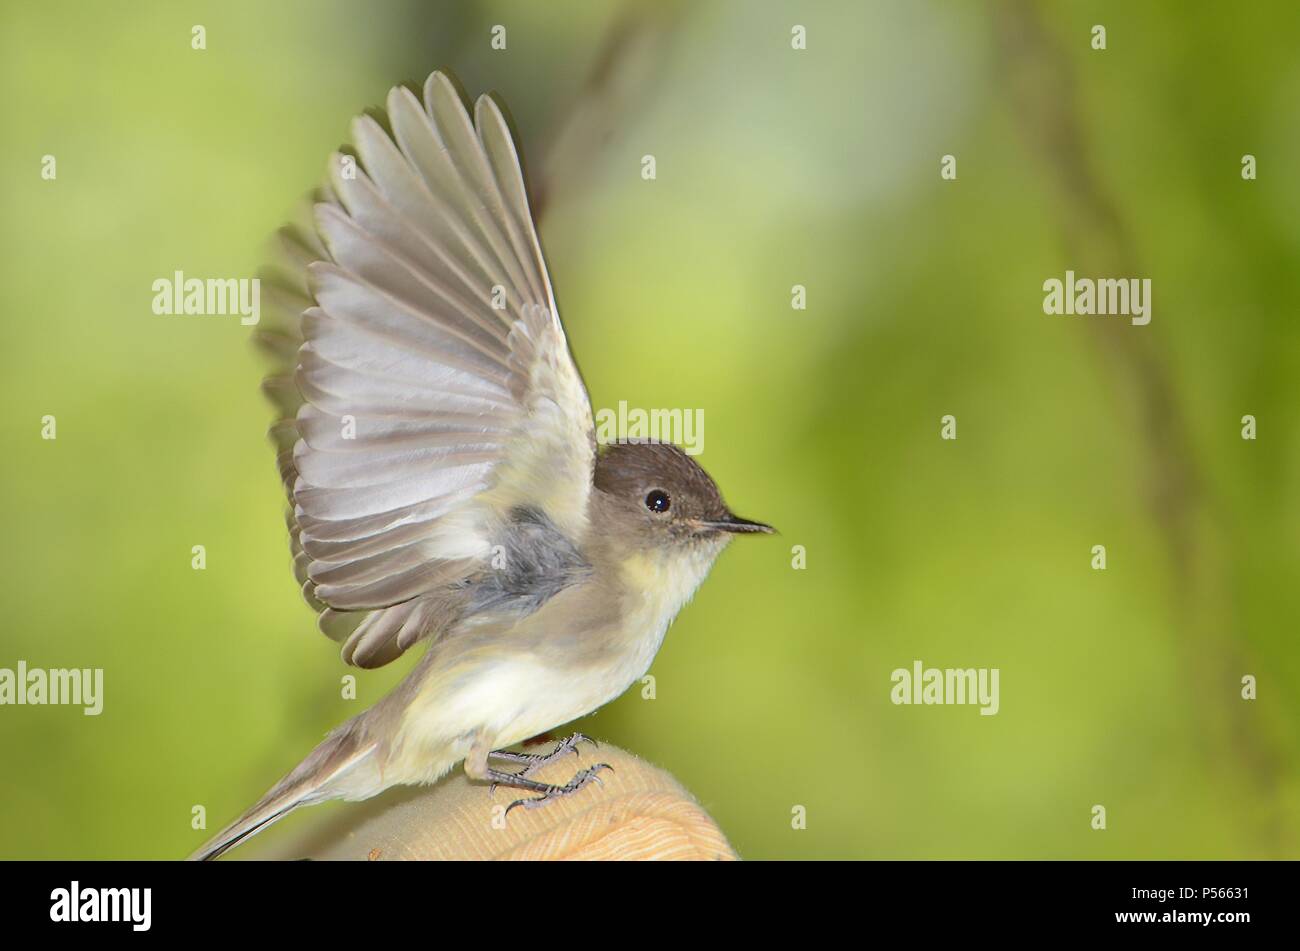 Bird Isolated on Green Background Stock Photo